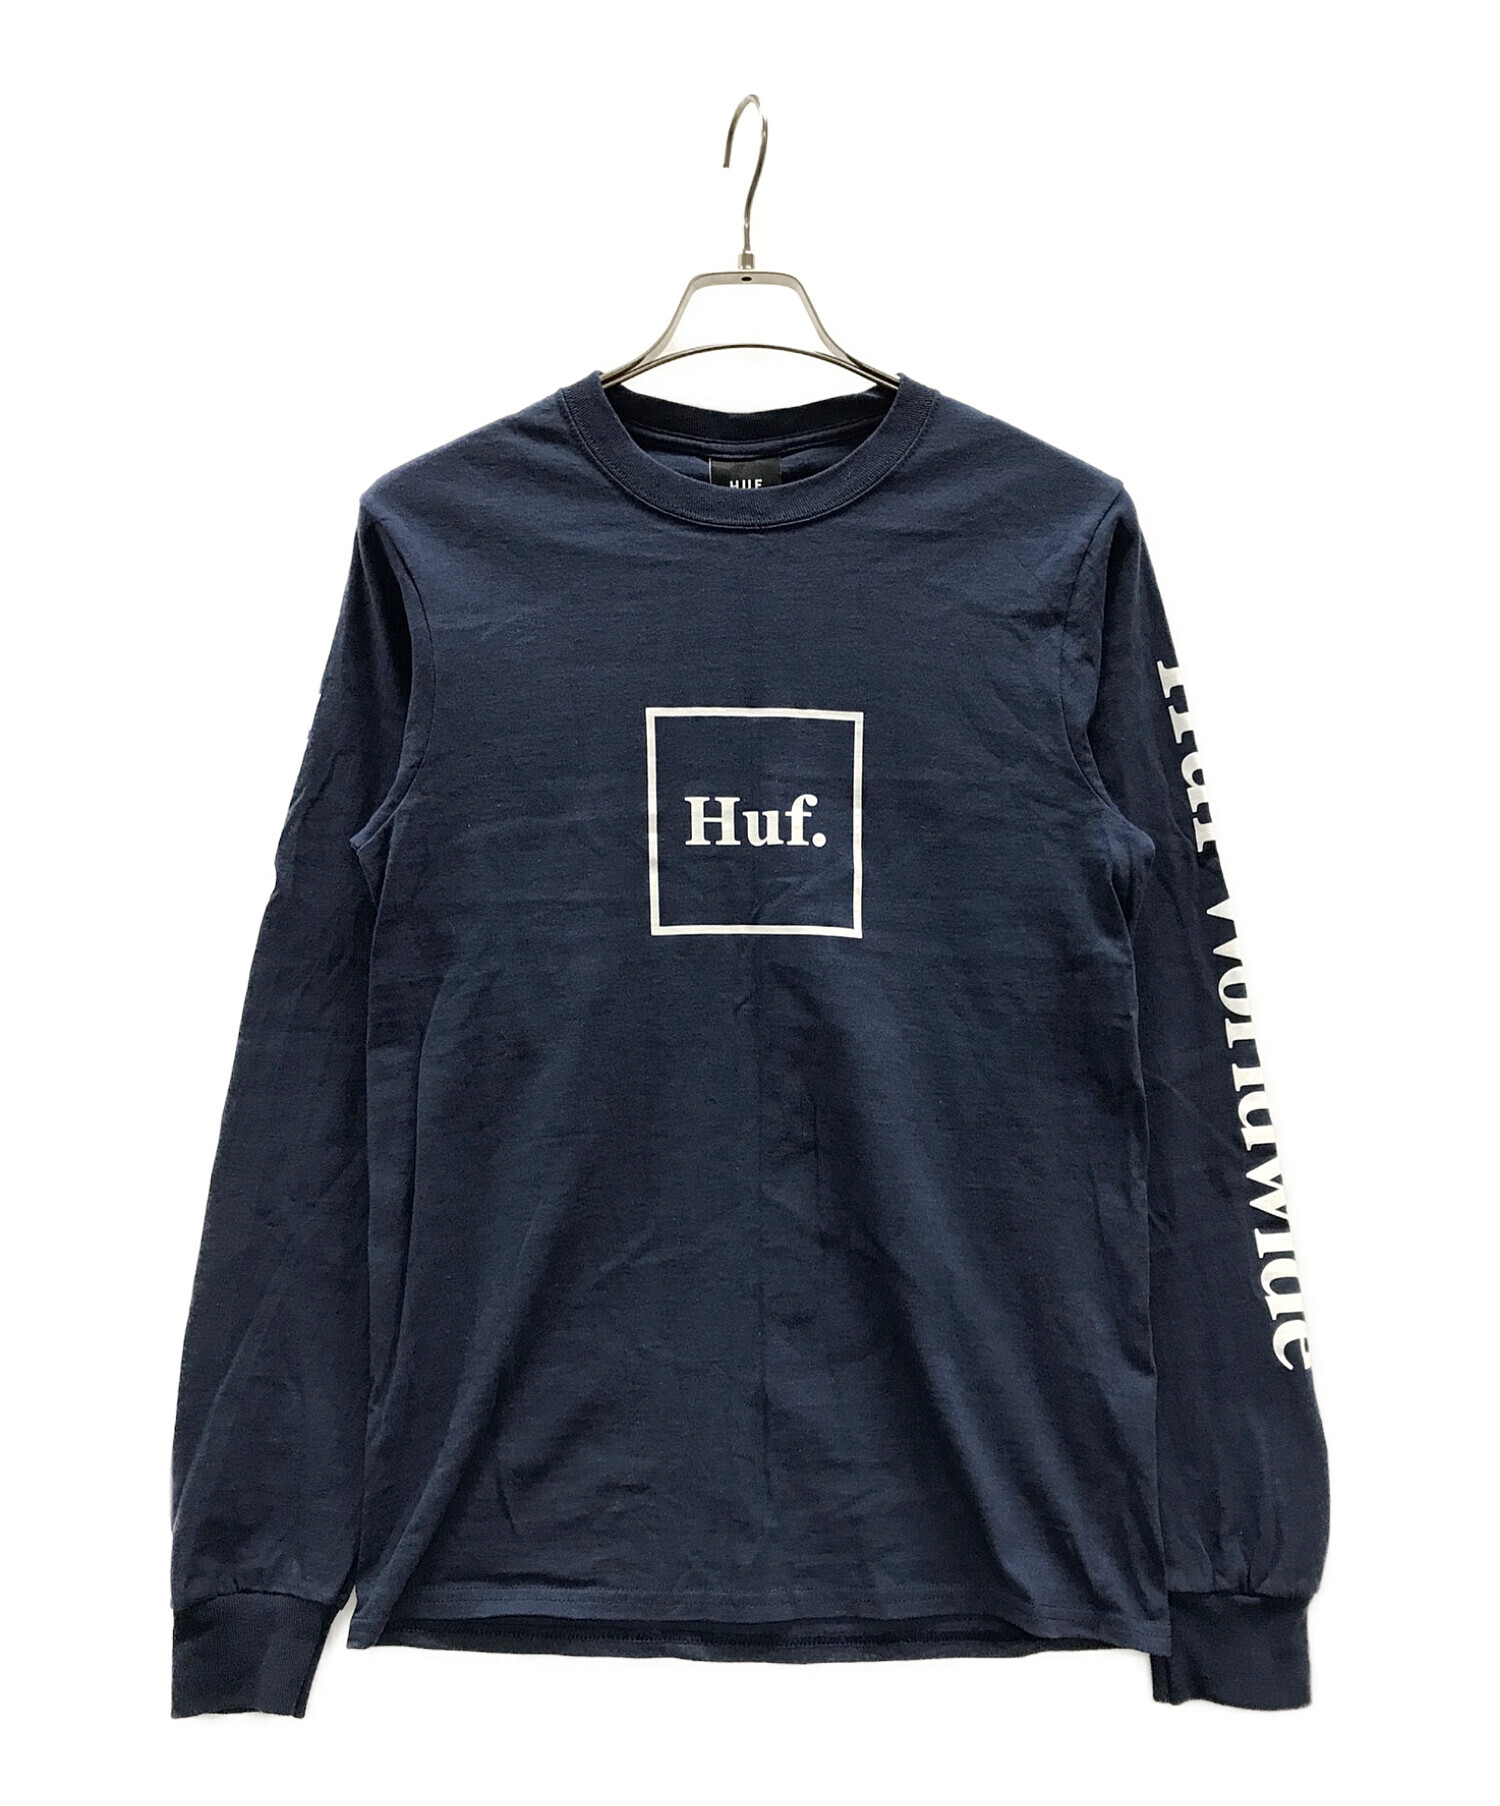 HUF (ハフ) 長袖Tシャツ ネイビー サイズ:S